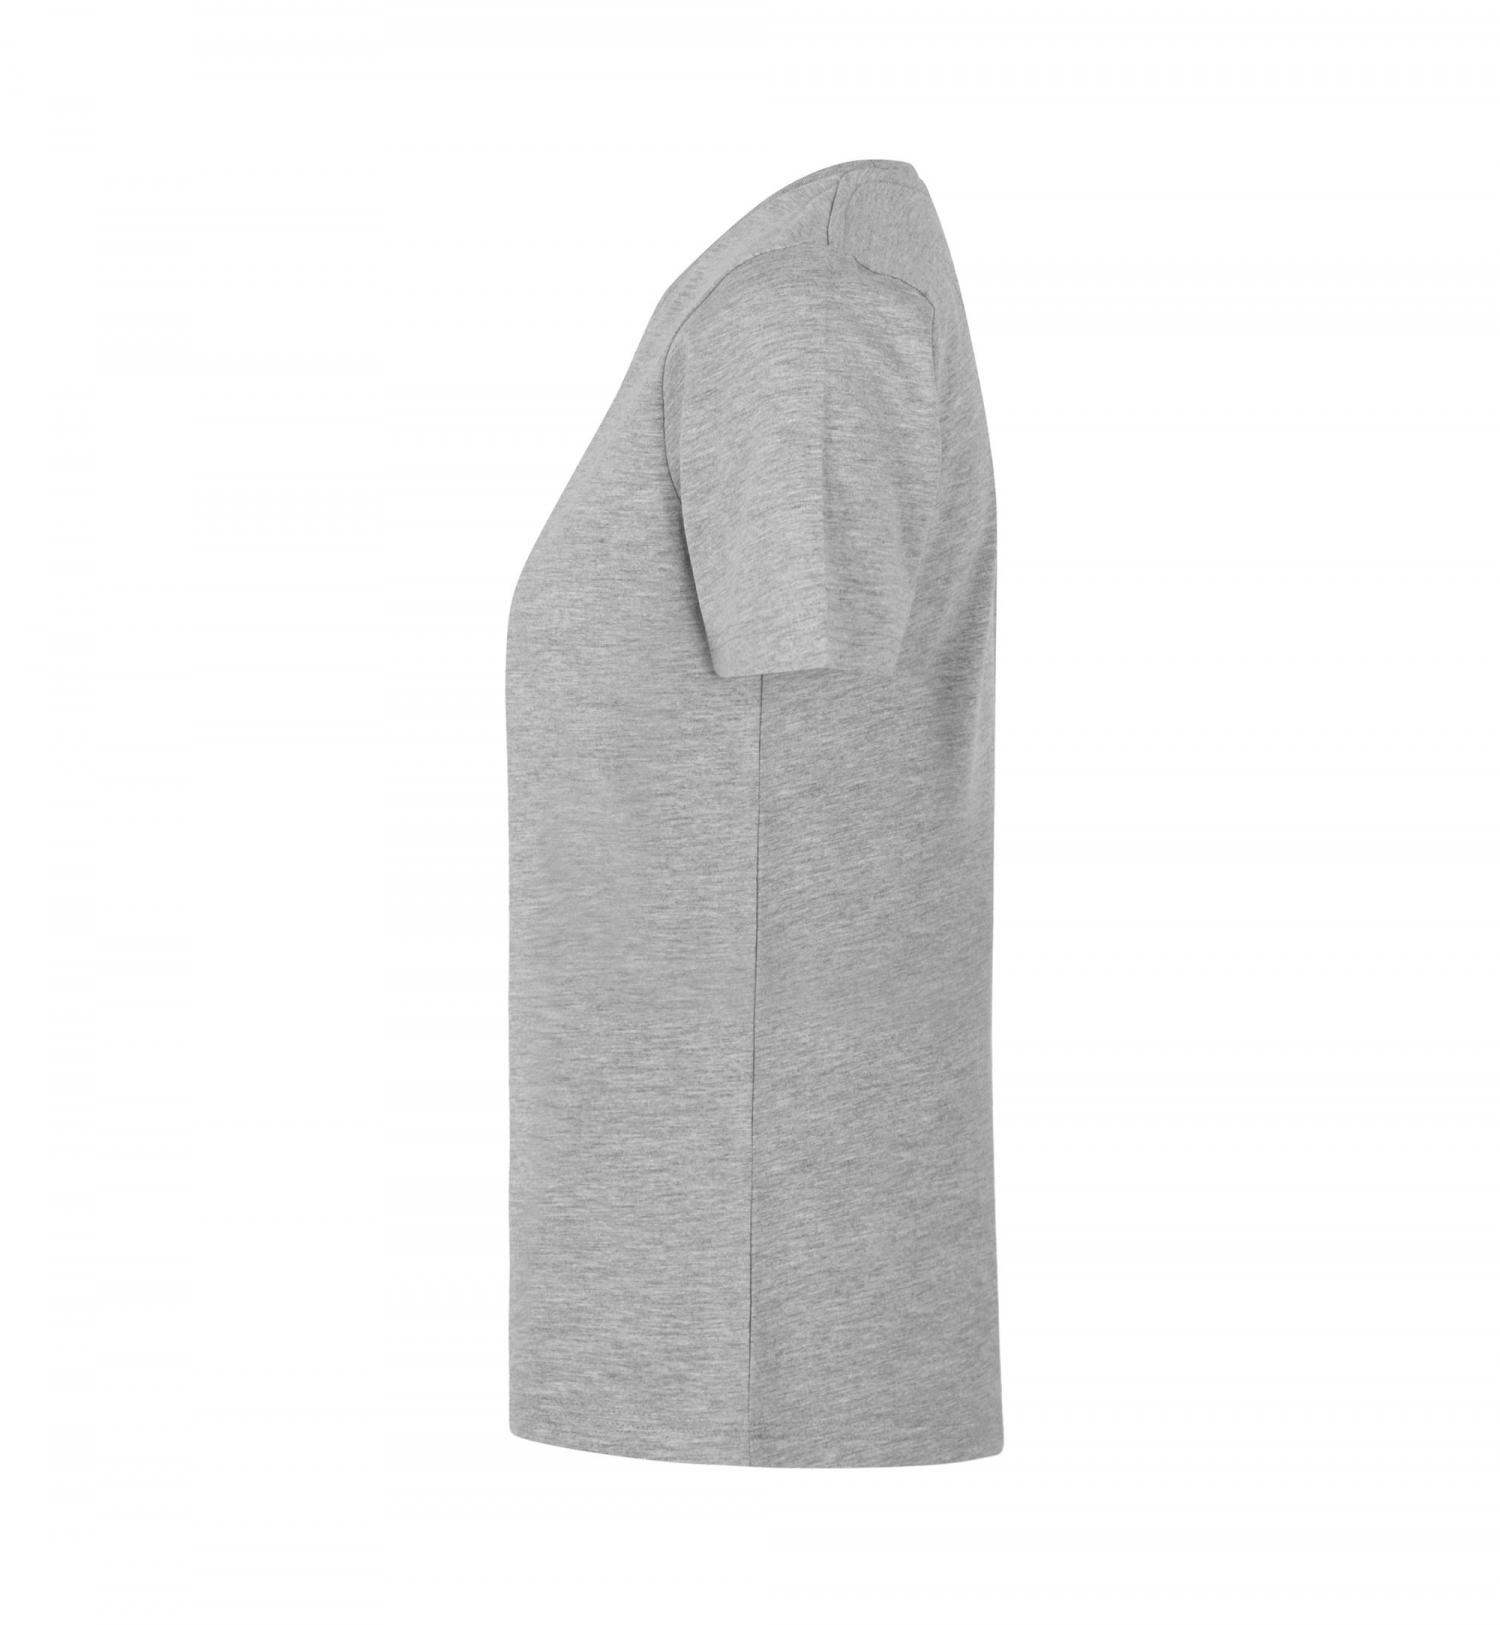 T-shirt PRO Wear | light | damski 0317-Grey melange